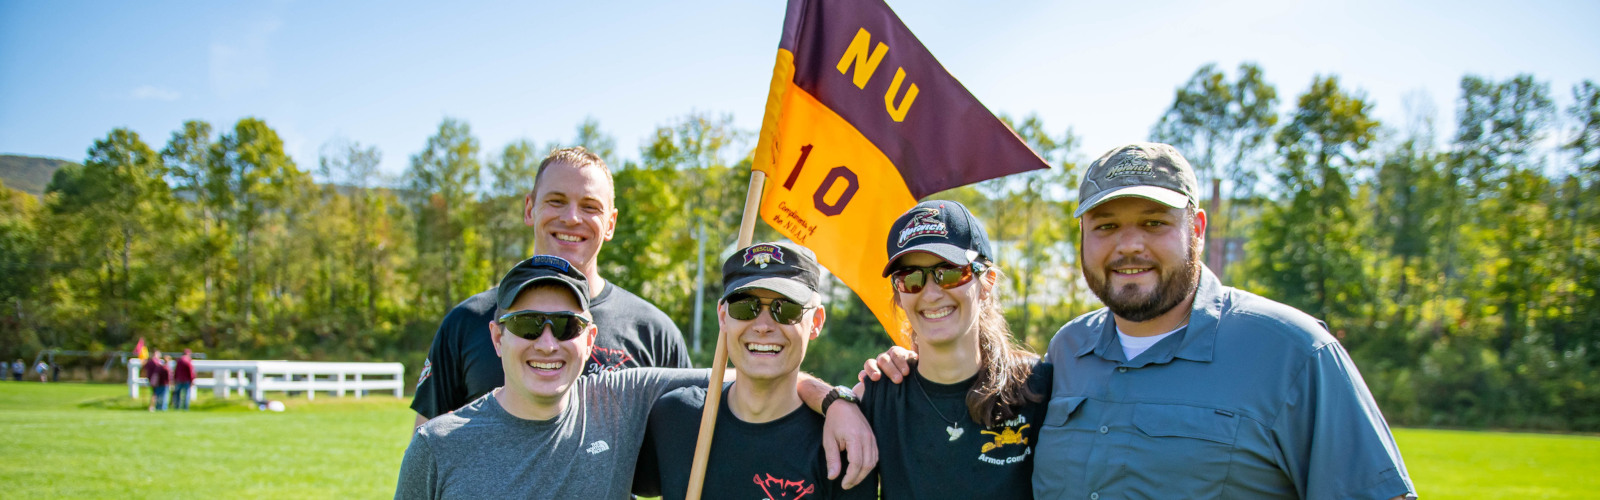 Group NU '10 Alumni Dog River Run participants